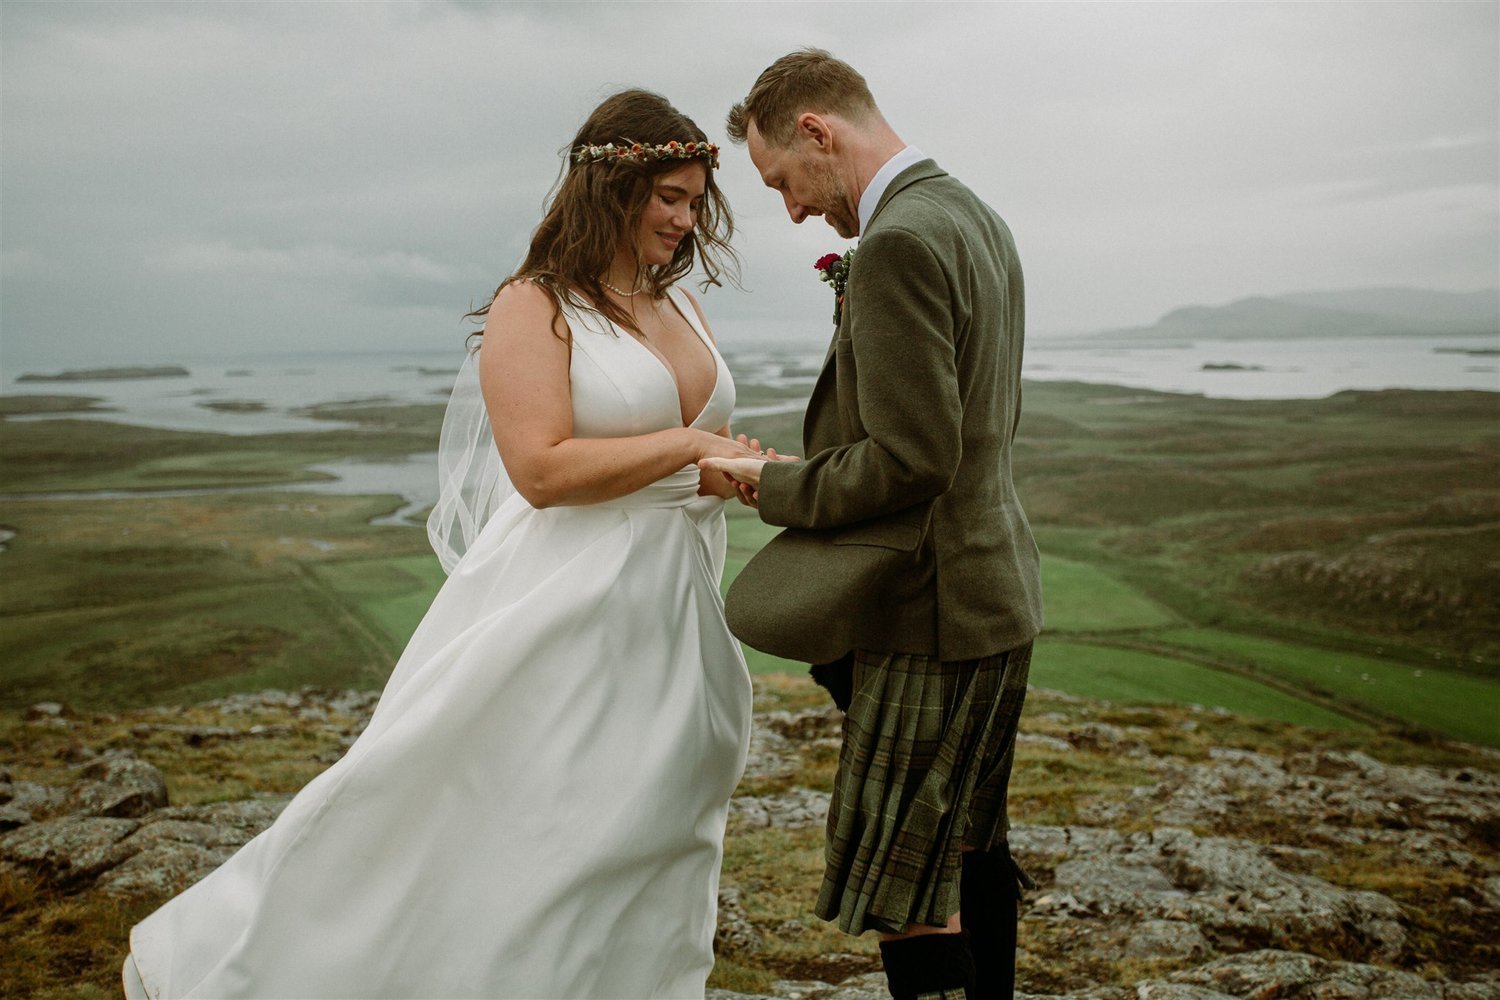 Exchanging wedding rings in beautiful Iceland.jpg